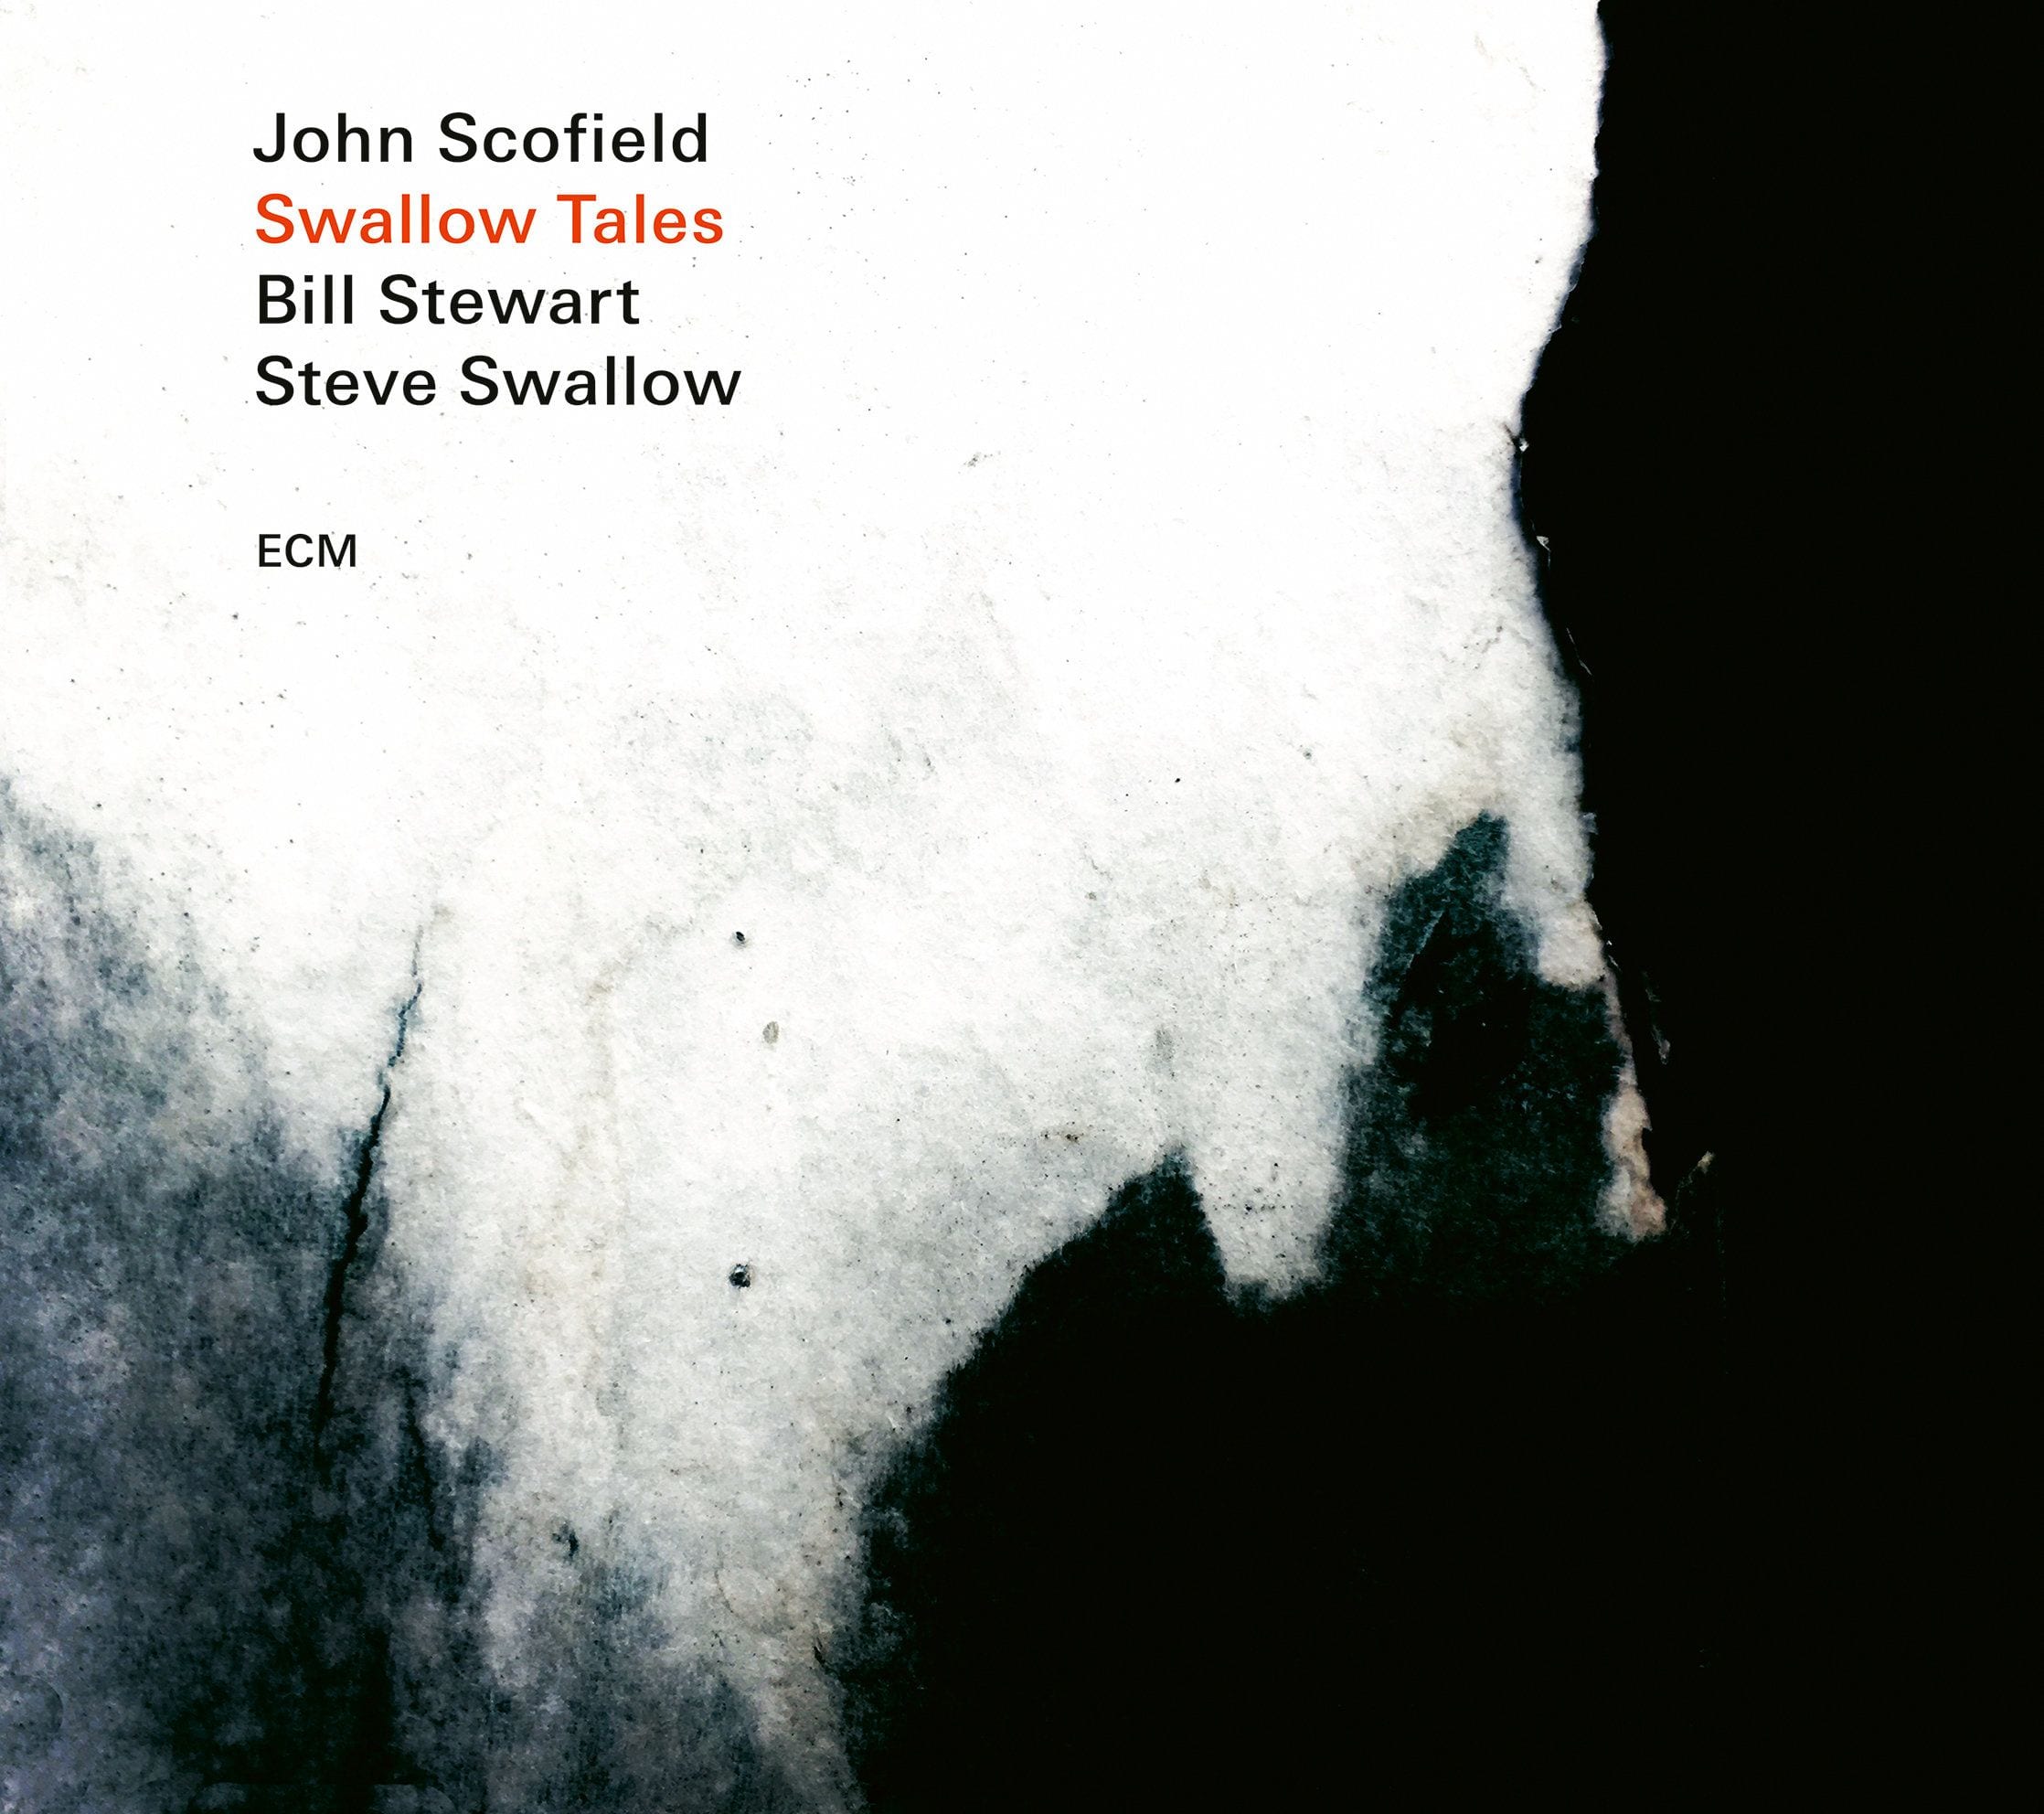 John Scofield Renews the Jazz Guitar Trio on ‘Swallow Tales’